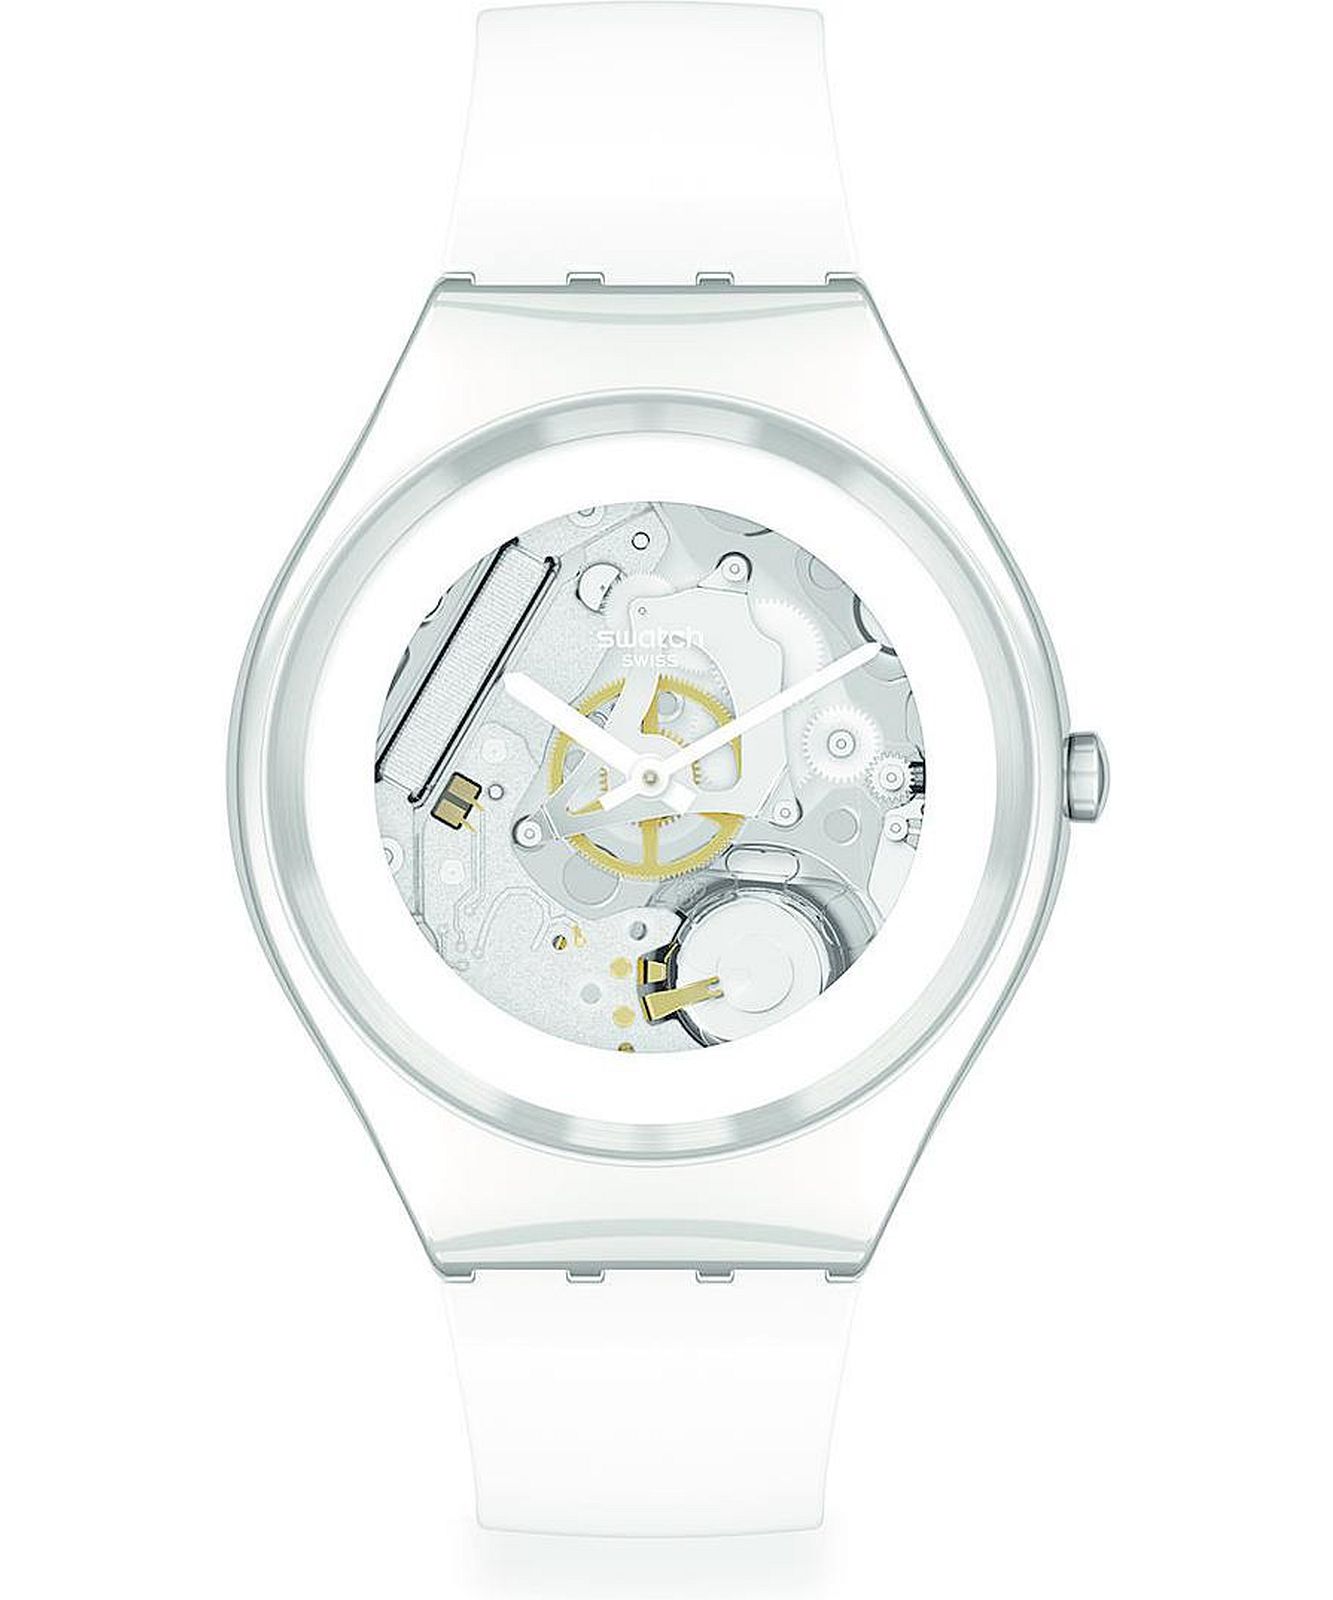 Reloj Swatch Mujer Skin Irony Pure White Irony SYXS138 - Joyería de Moda